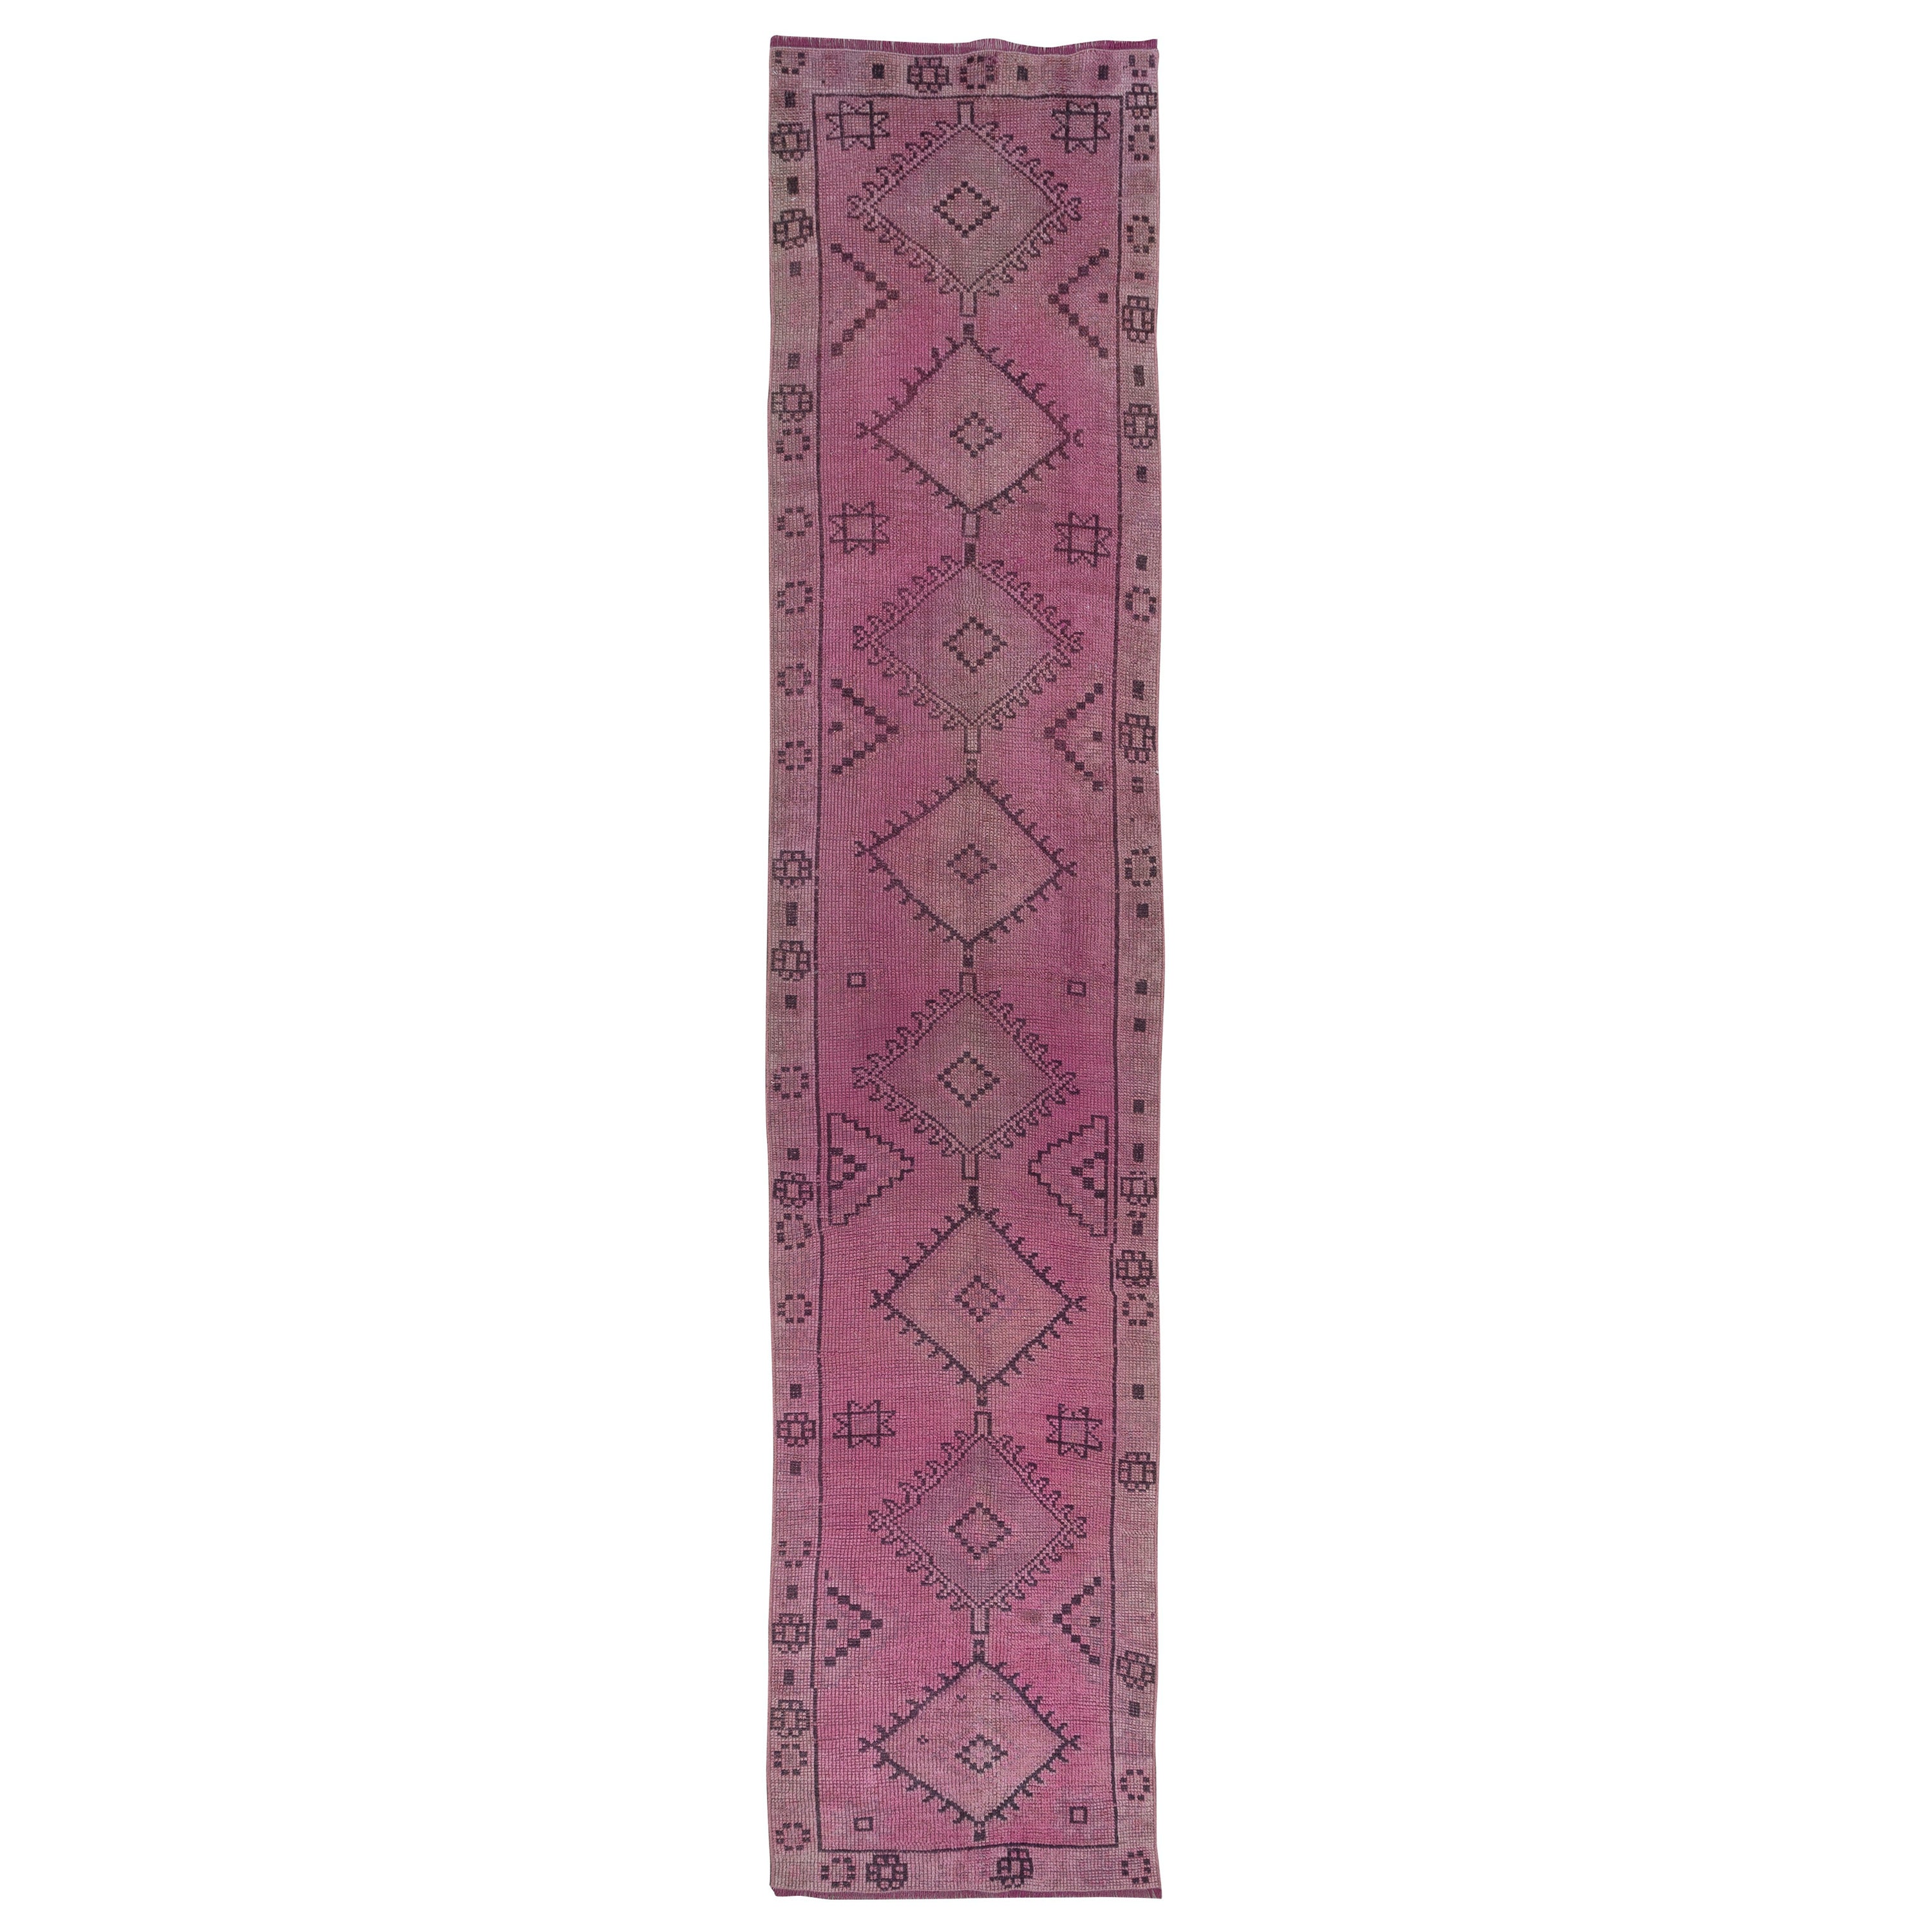 2.8x12.5 Ft Handmade Pink Runner Rug for Hallway, Modern Turkish Corridor Carpet